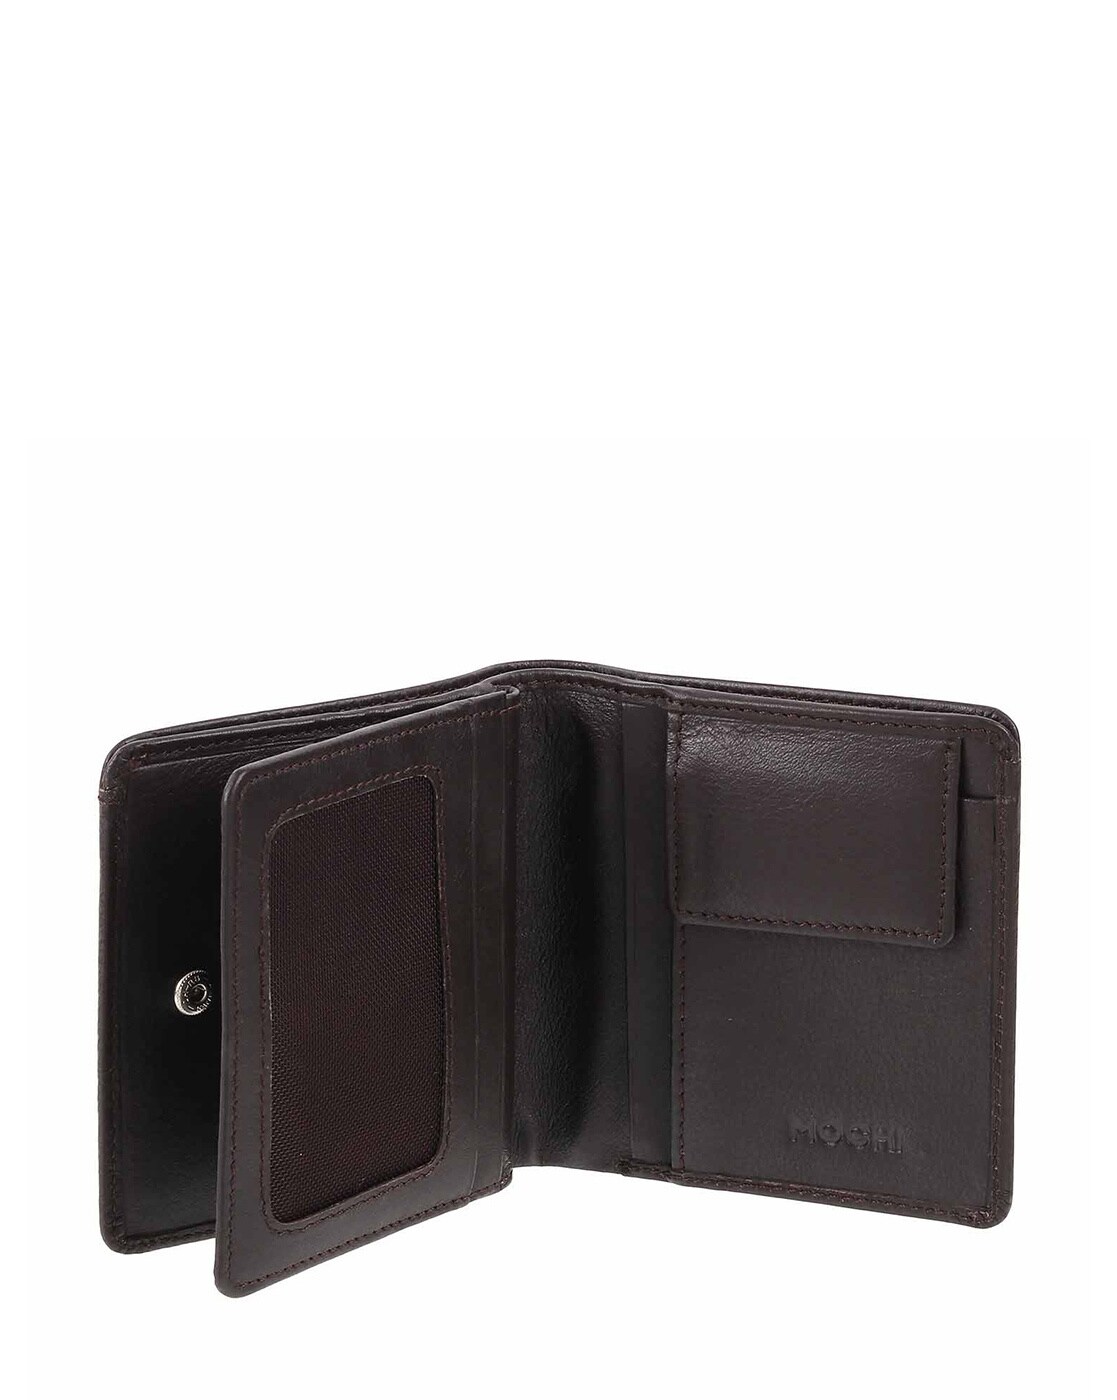 Cow Leather Wallet Williampolo | Williampolo Men Wallet Leather - Fashion  New Arrival - Aliexpress